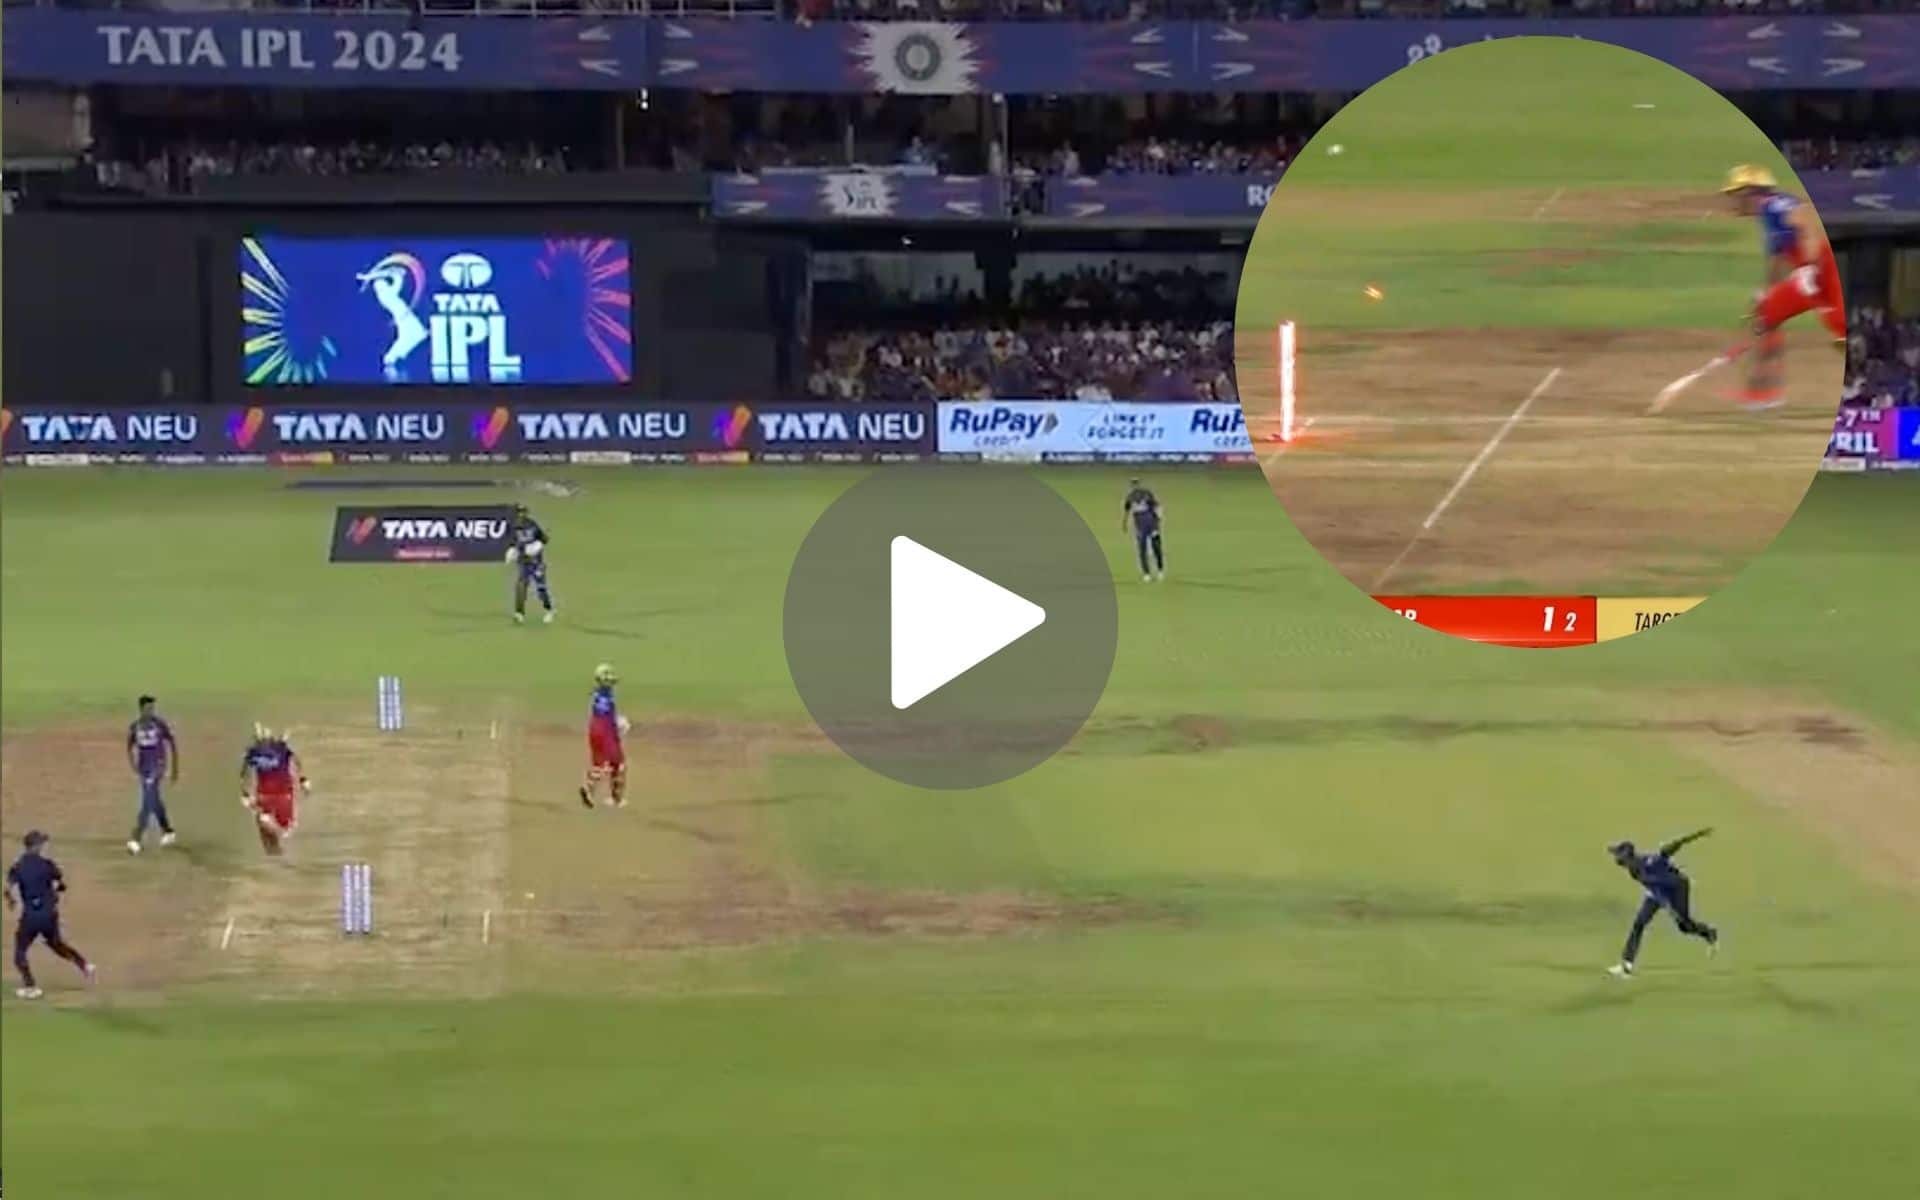 [Watch] Devdutt Padikkal's 'Laser' Throw Proves Lethal As RCB Lose Captain Faf